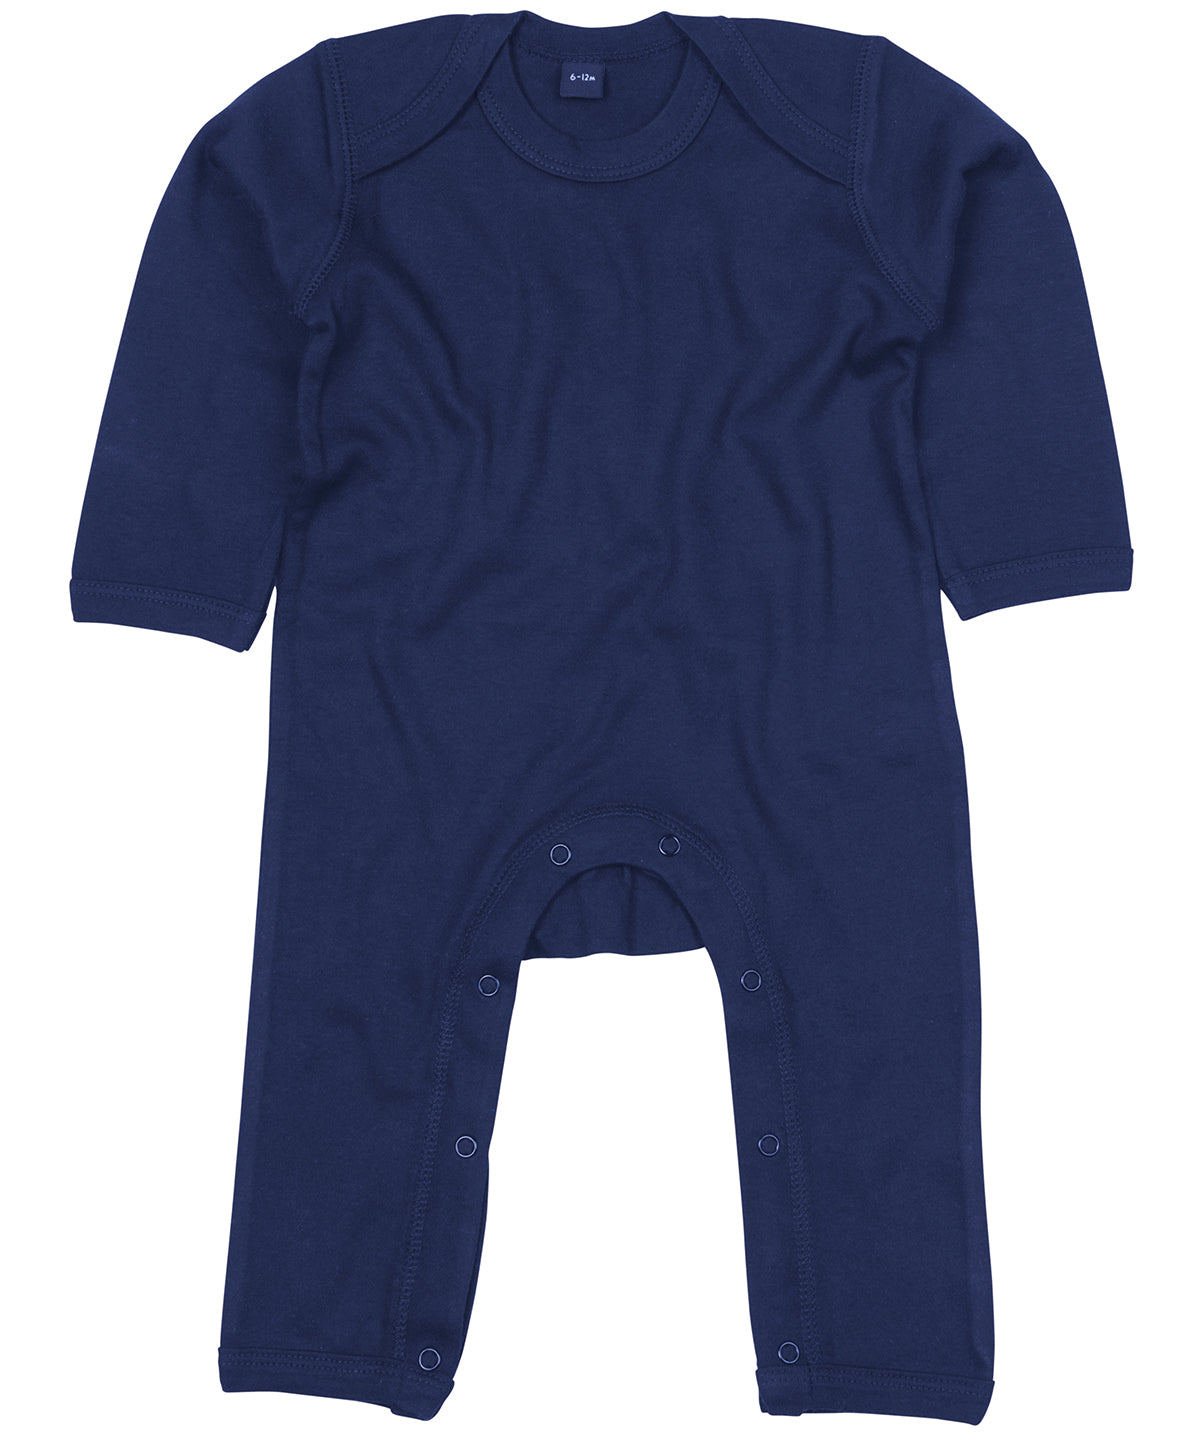 Personalised Bodysuits - Light Blue Babybugz Baby rompersuit